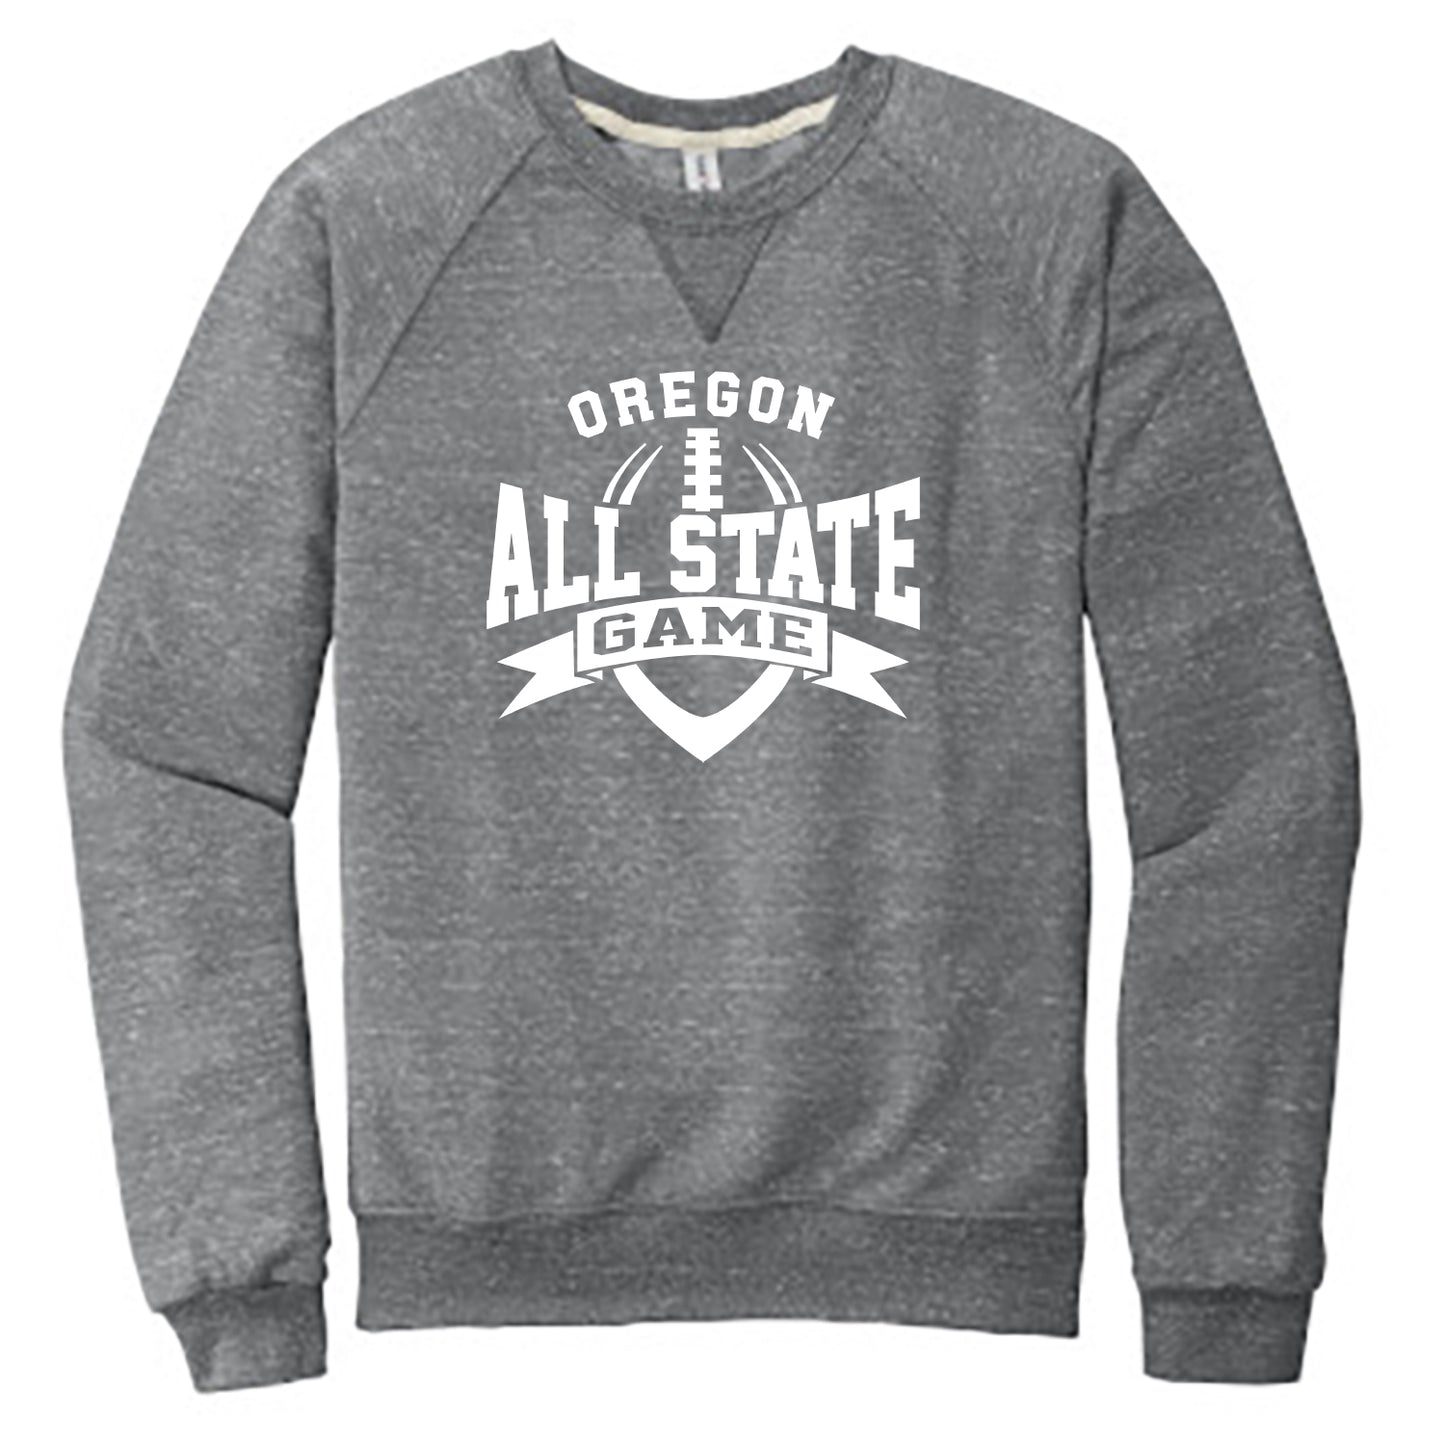 Oregon All State - Men's Raglan Crew Sweatshirt - 4 color options